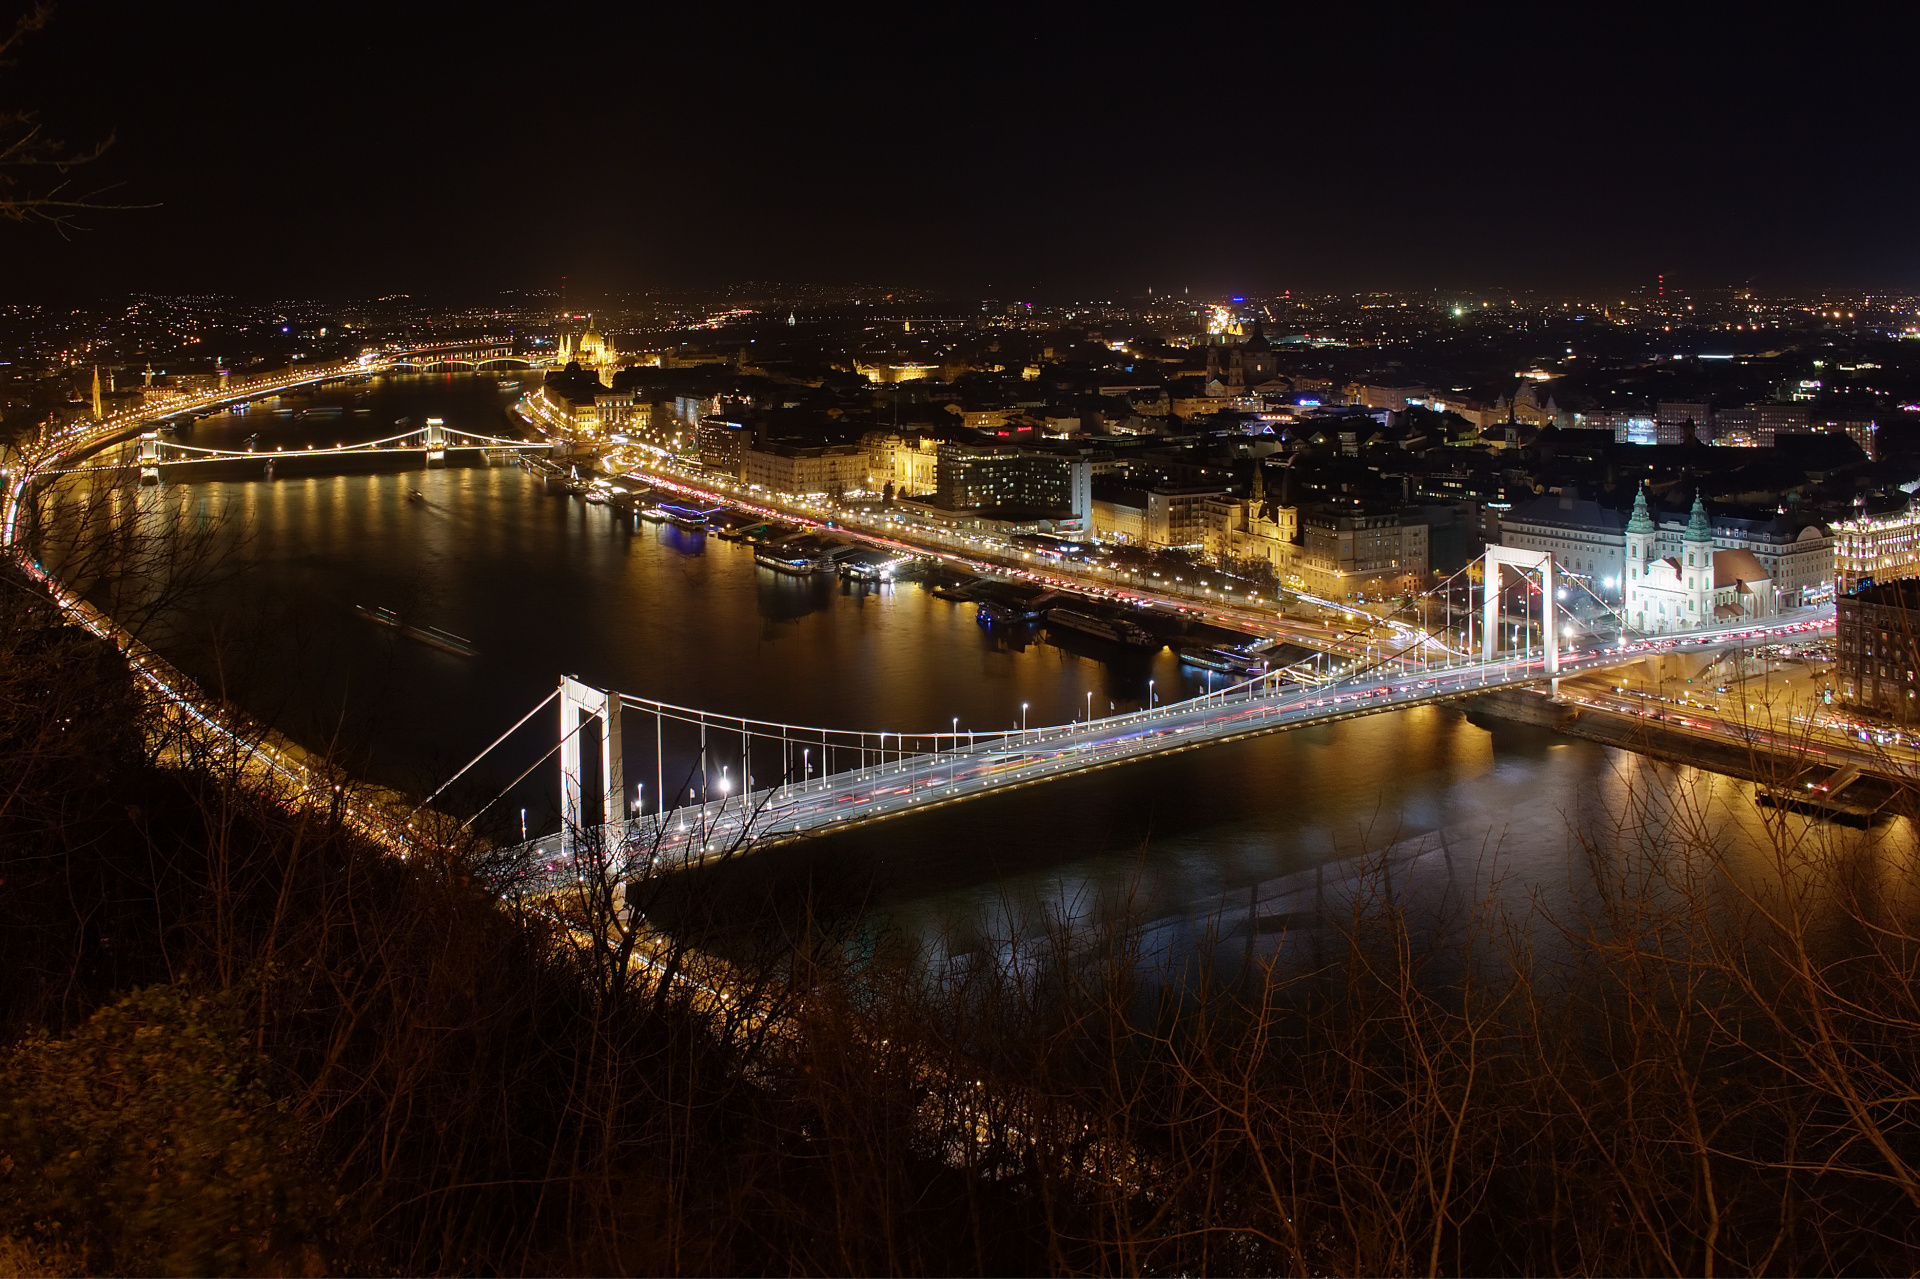 Erzsébet híd - Elizabeth Bridge and Pest from Gellért Hill (Travels » Budapest » Budapest at Night)